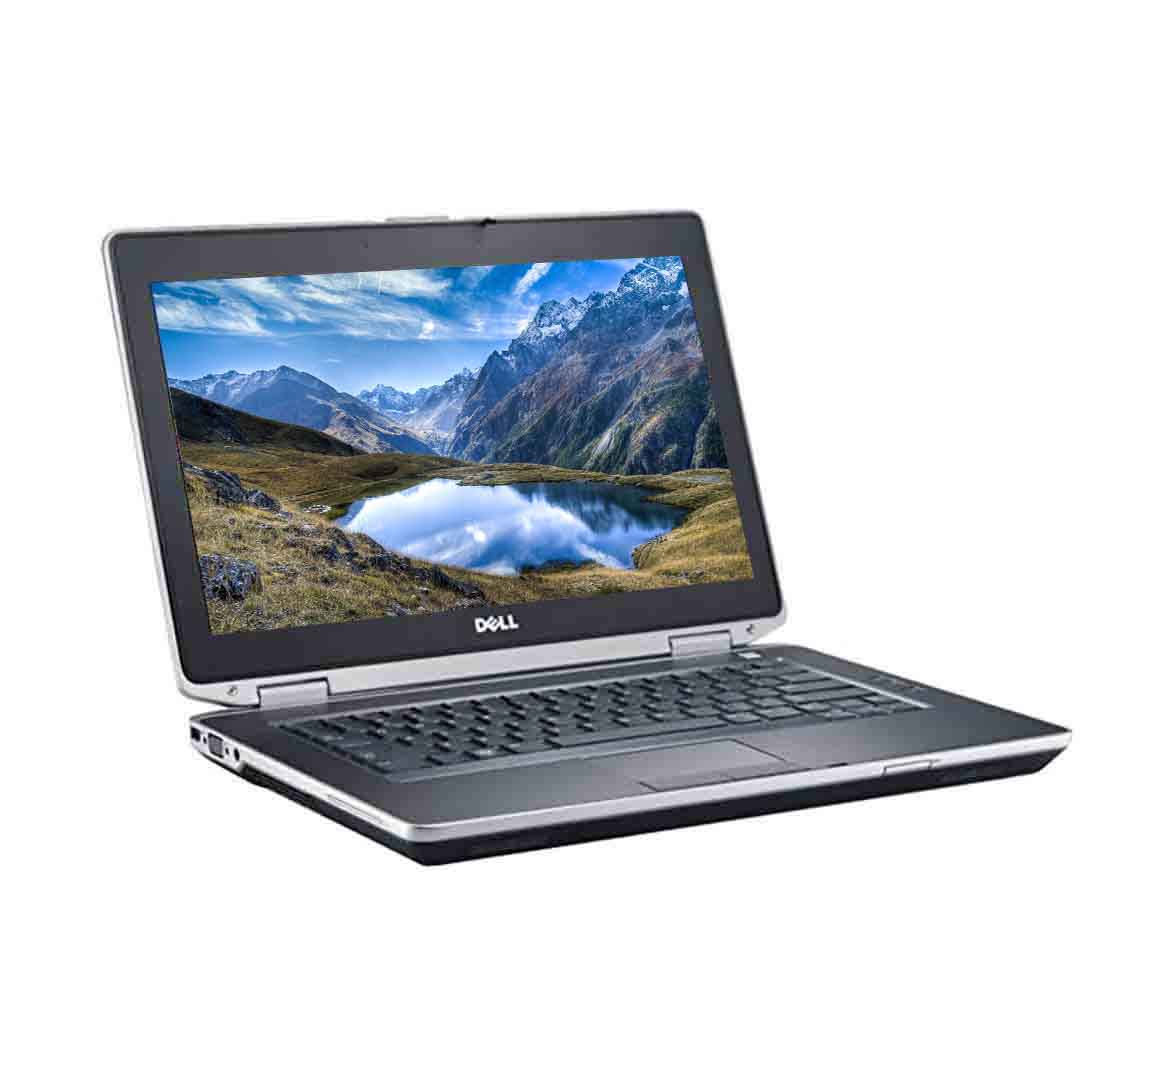 Dell Latitude E6430, Intel Core i7-3rd Gen CPU, 8GB RAM, 500GB HDD, 14 inch Display, Nvidia NVS 5200M 1GB DDR5, Win 10 Pro, Refurbished Laptop